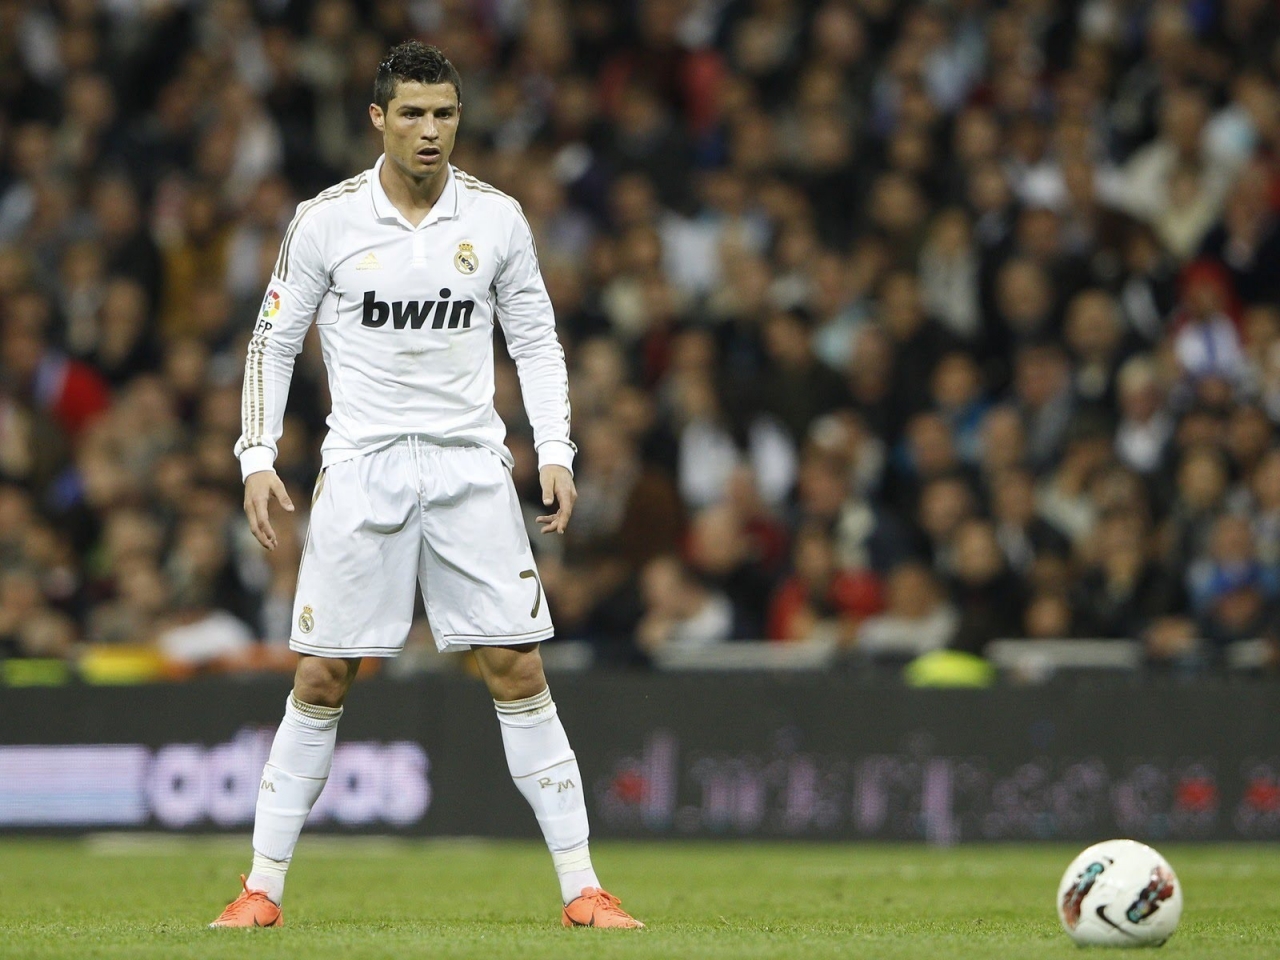 Cristiano Ronaldo Concentrating for 1280 x 960 resolution